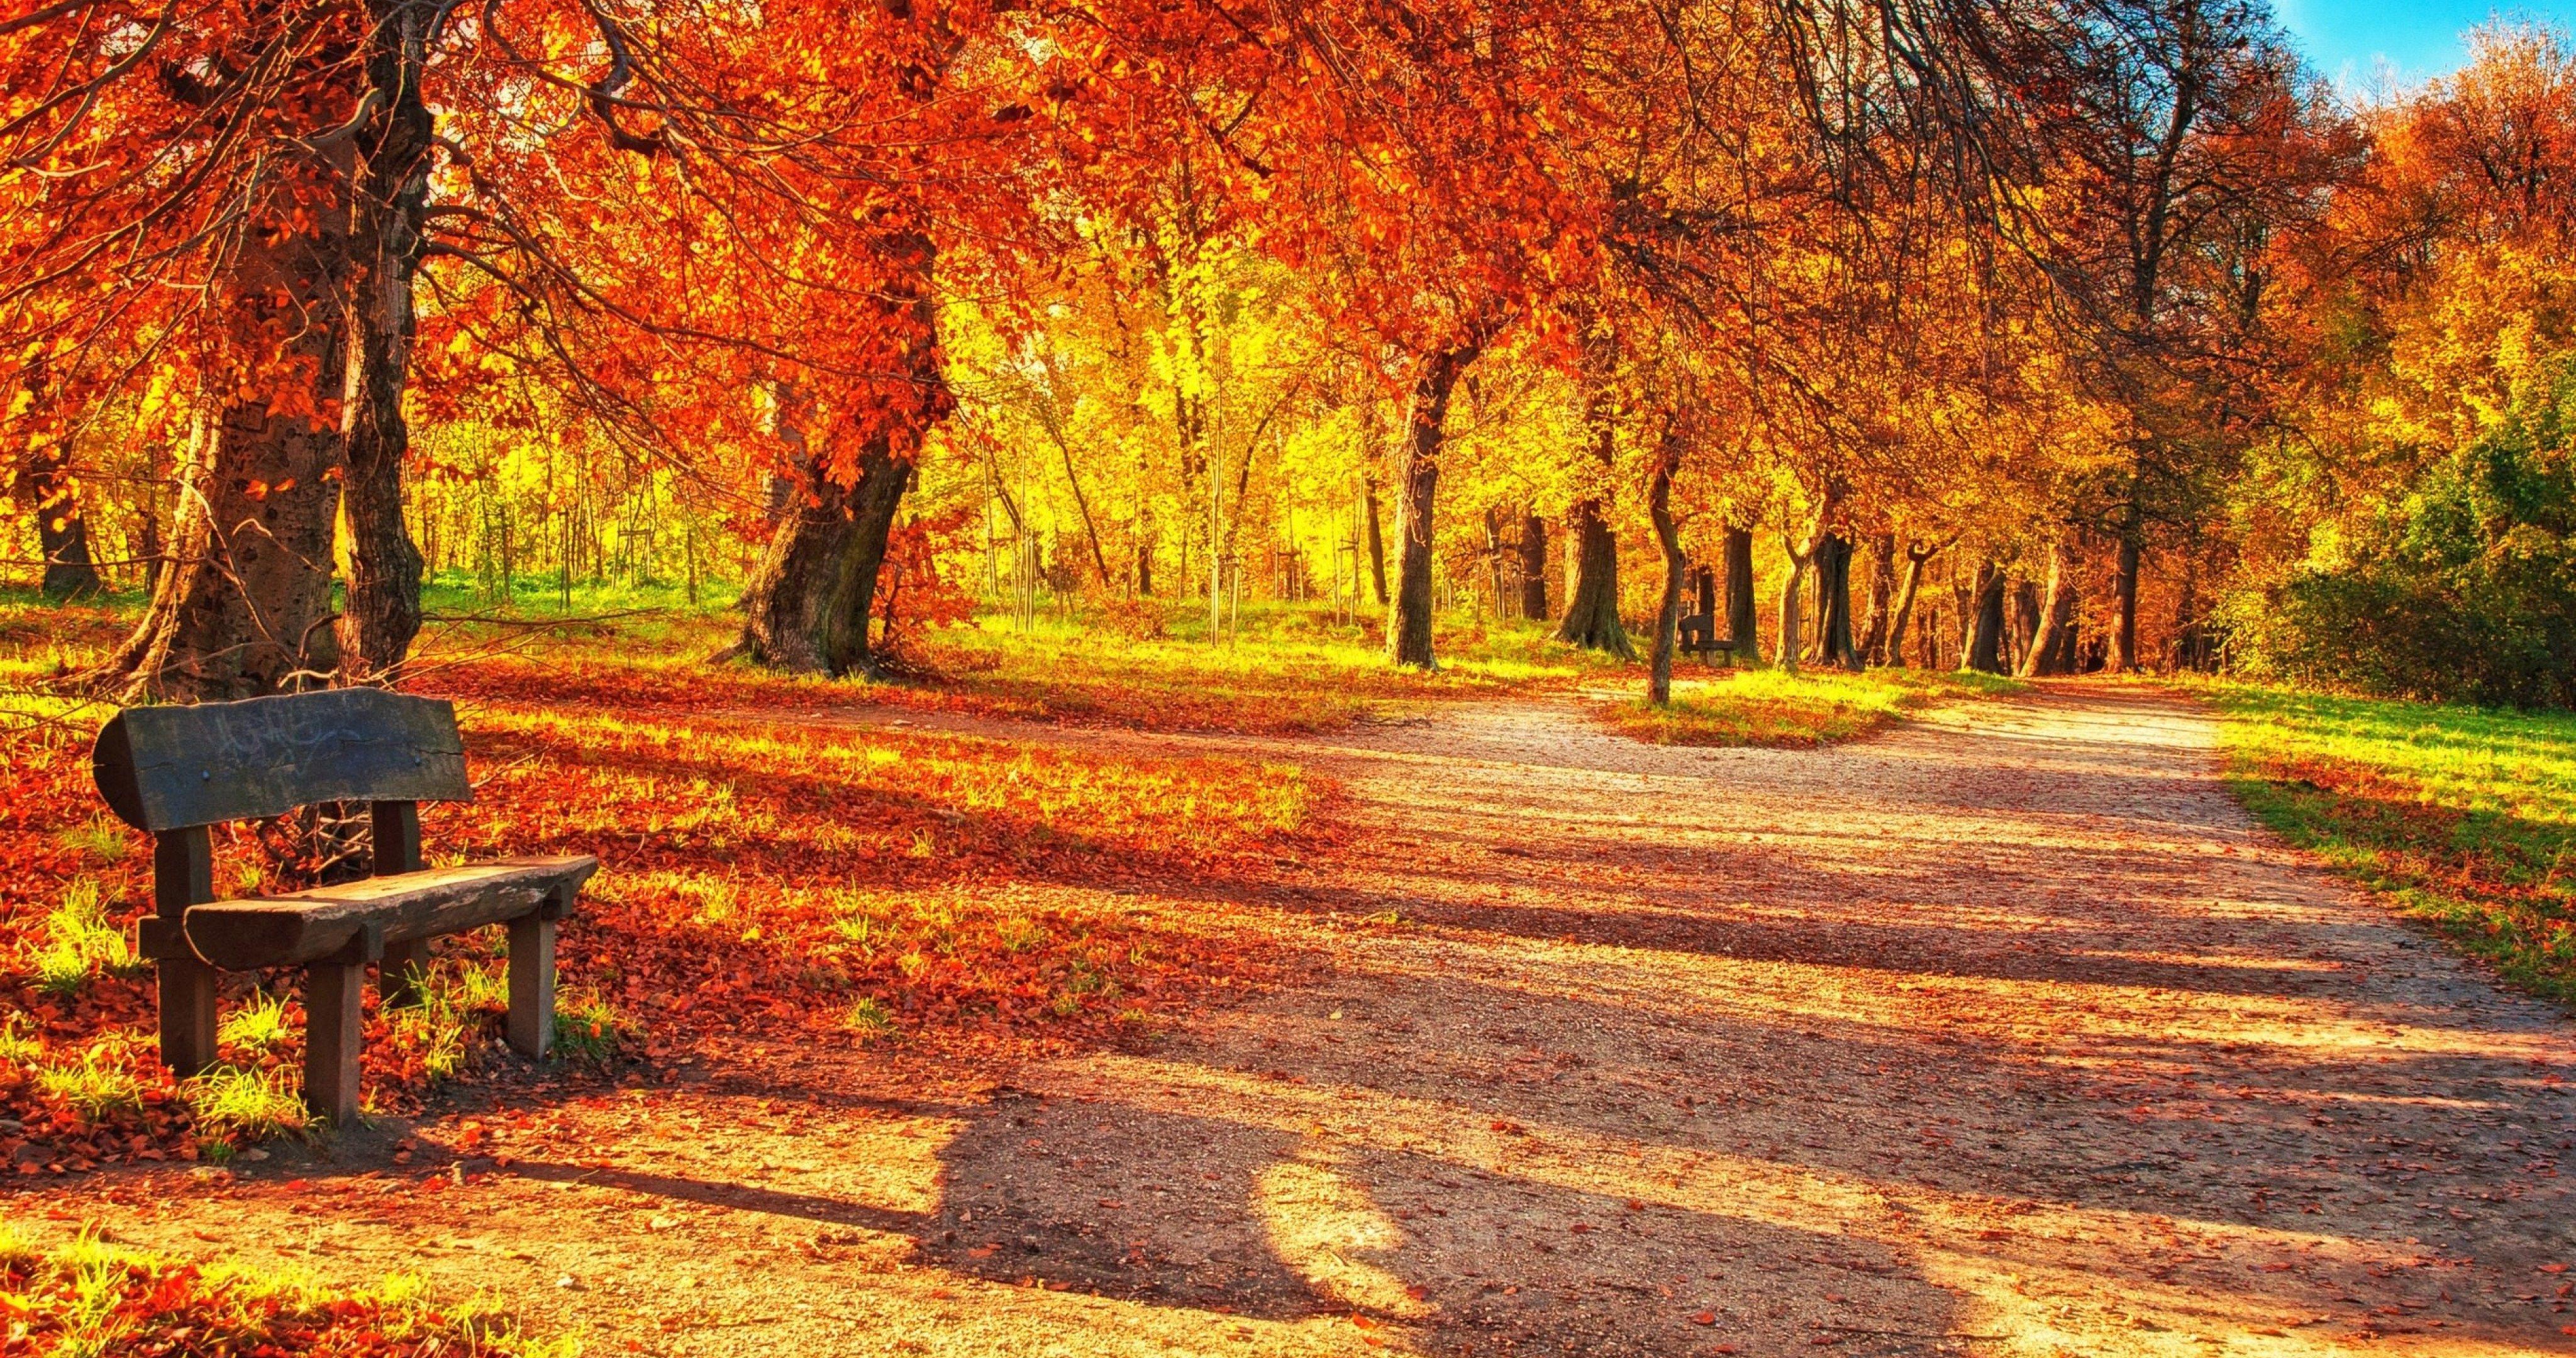 autumn leaves park 4k ultra HD wallpaper. Autumn leaves wallpaper, Autumn landscape, Landscape